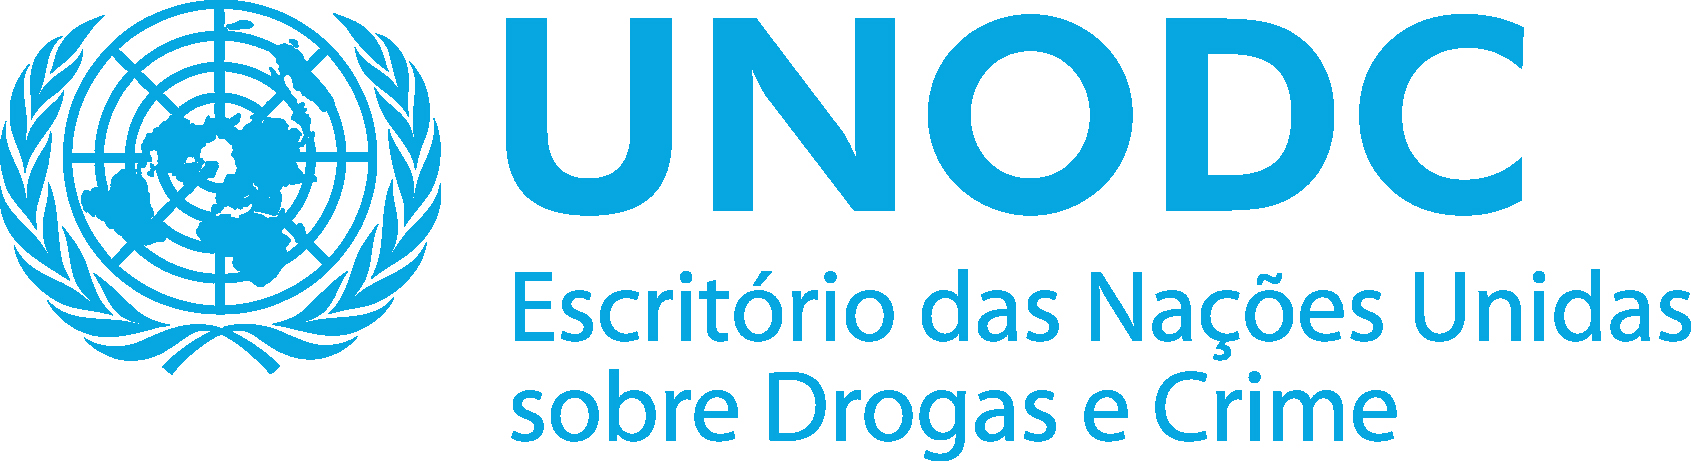 UNOV_UNODC_draft